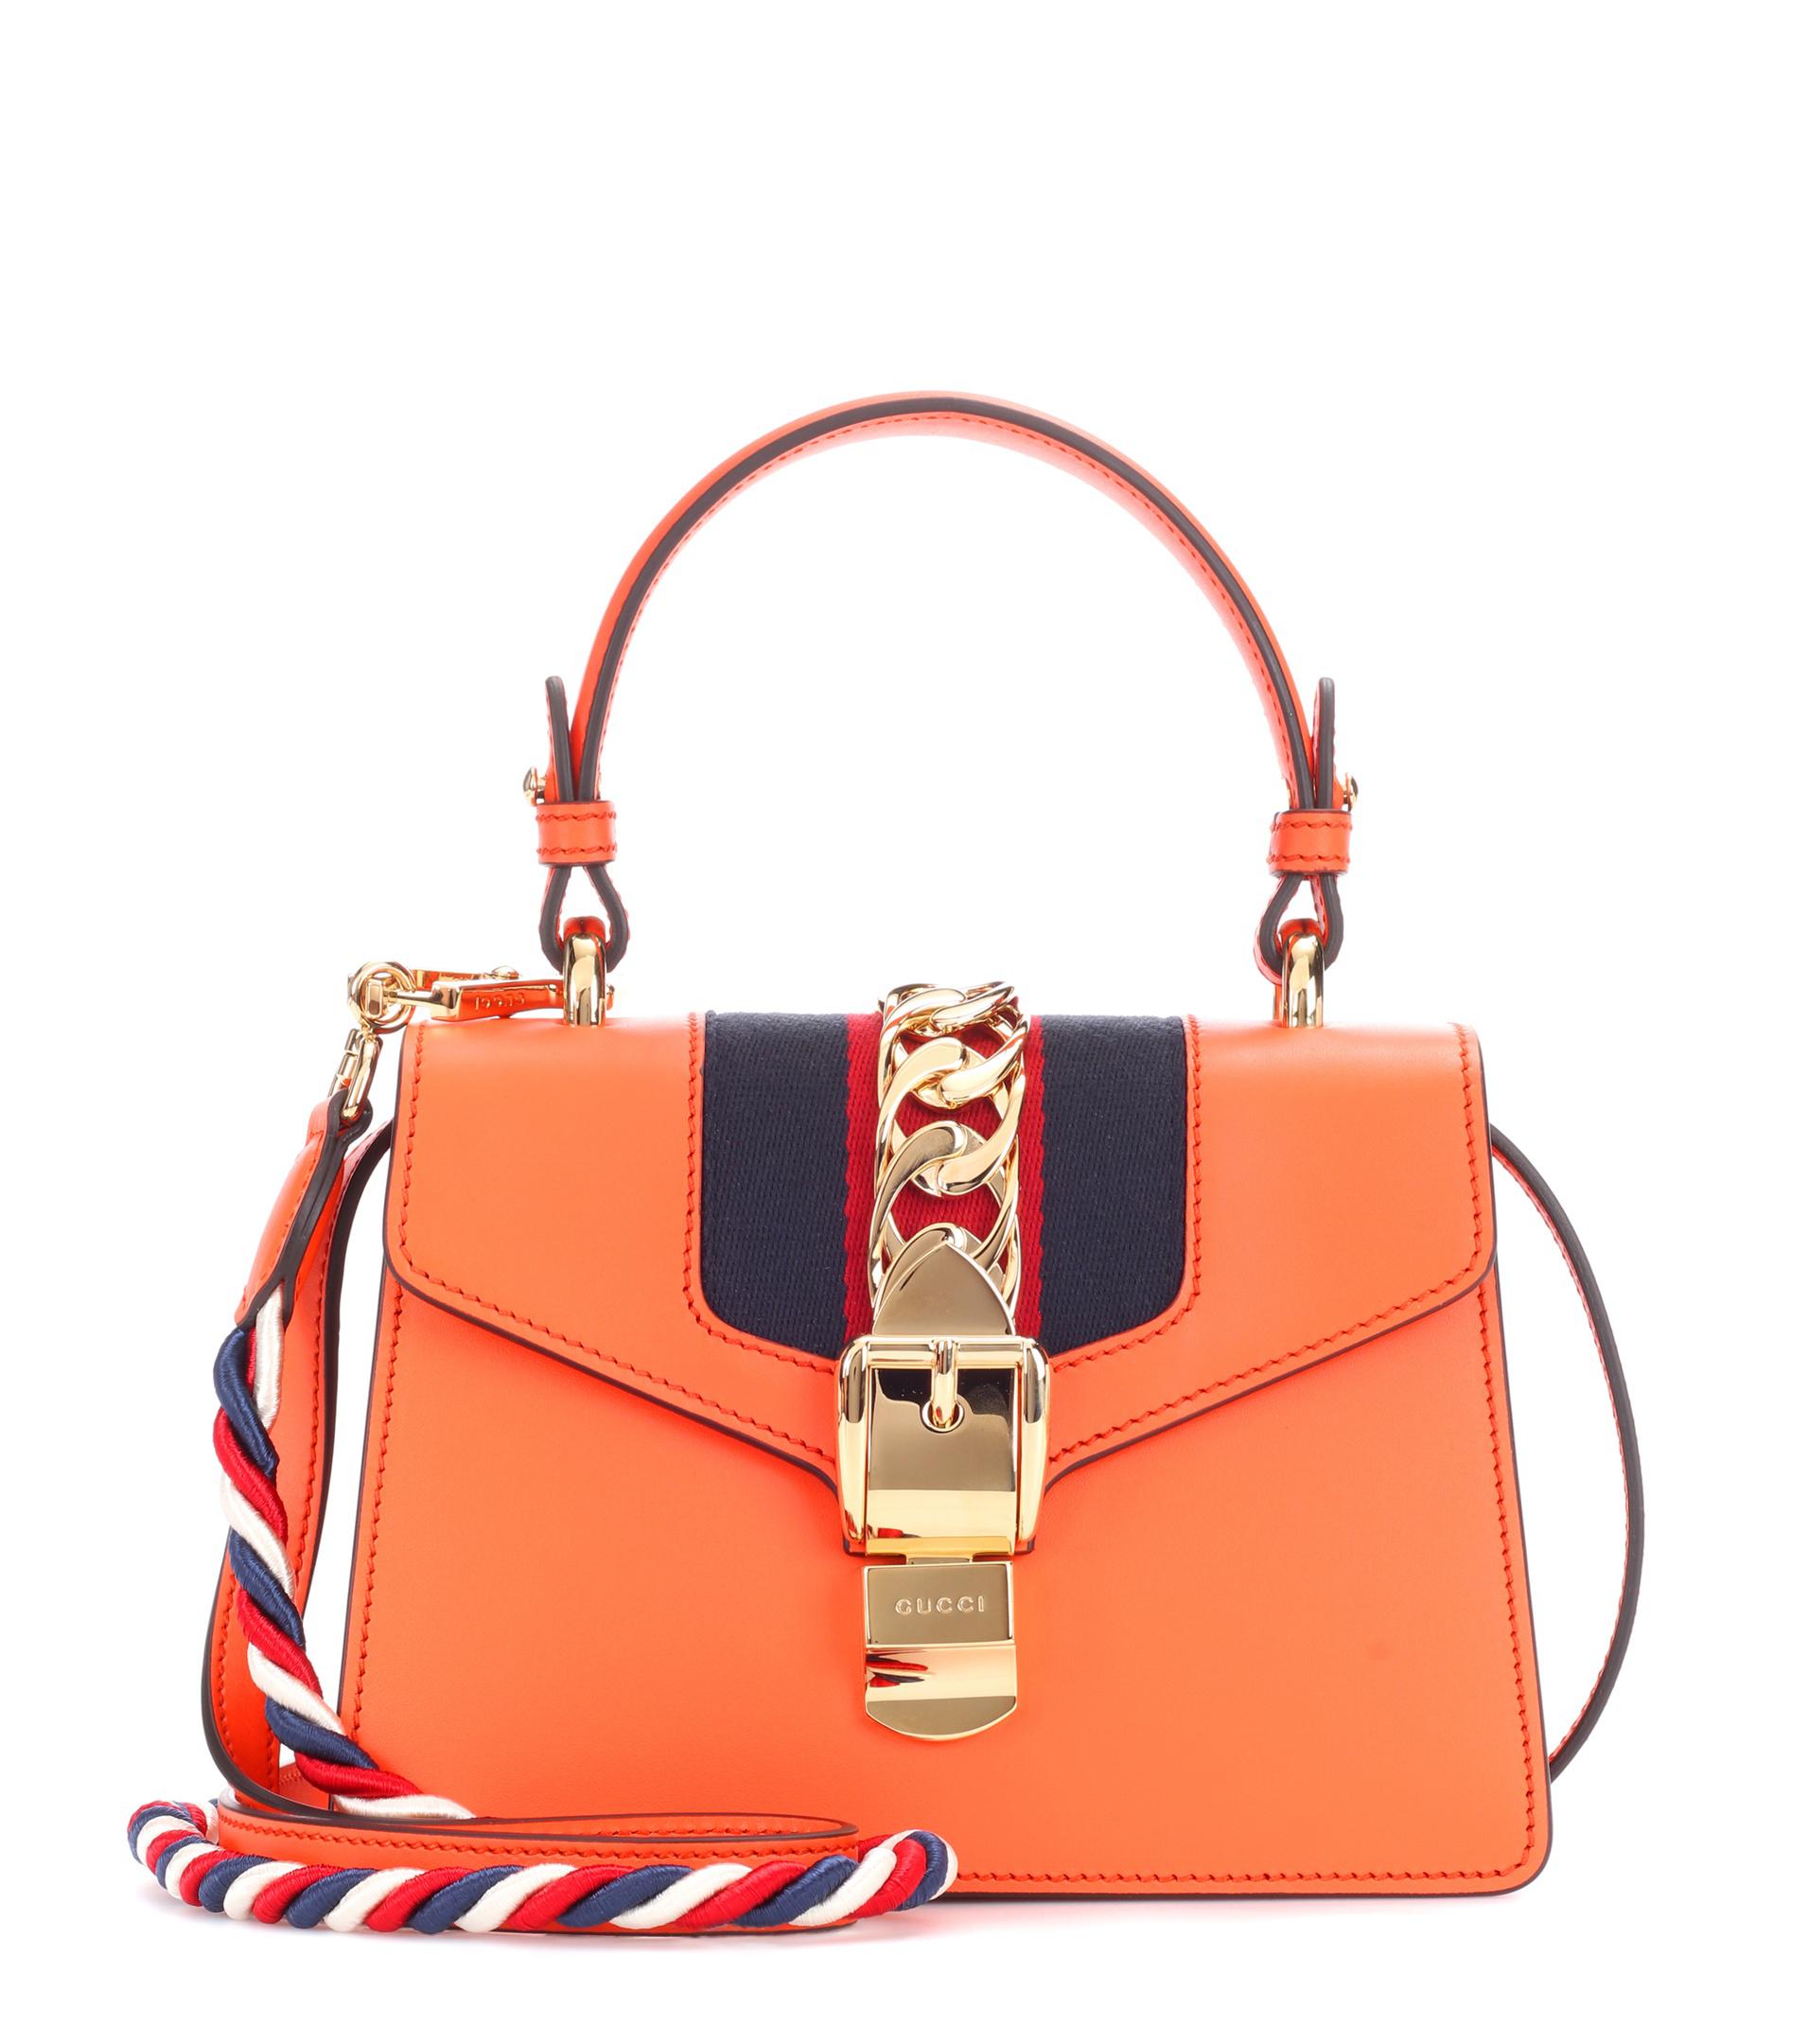 Gucci Sylvie Mini Leather Crossbody Bag in Orange - Lyst